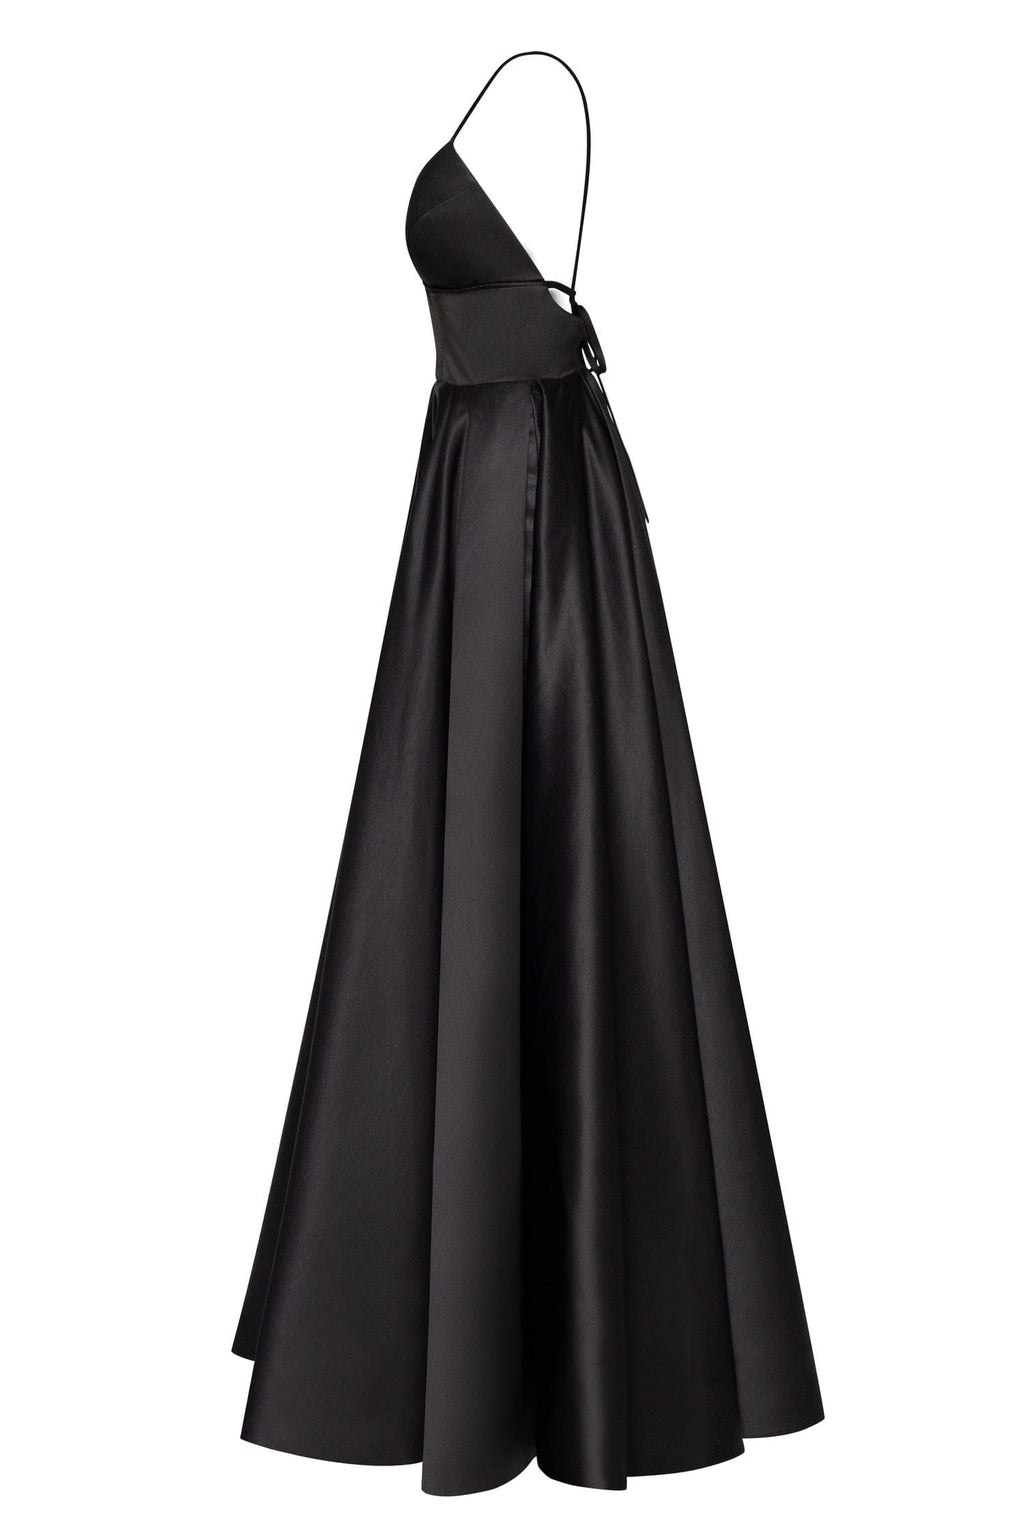 Black Spaghetti strap ball dress with open back - Milla